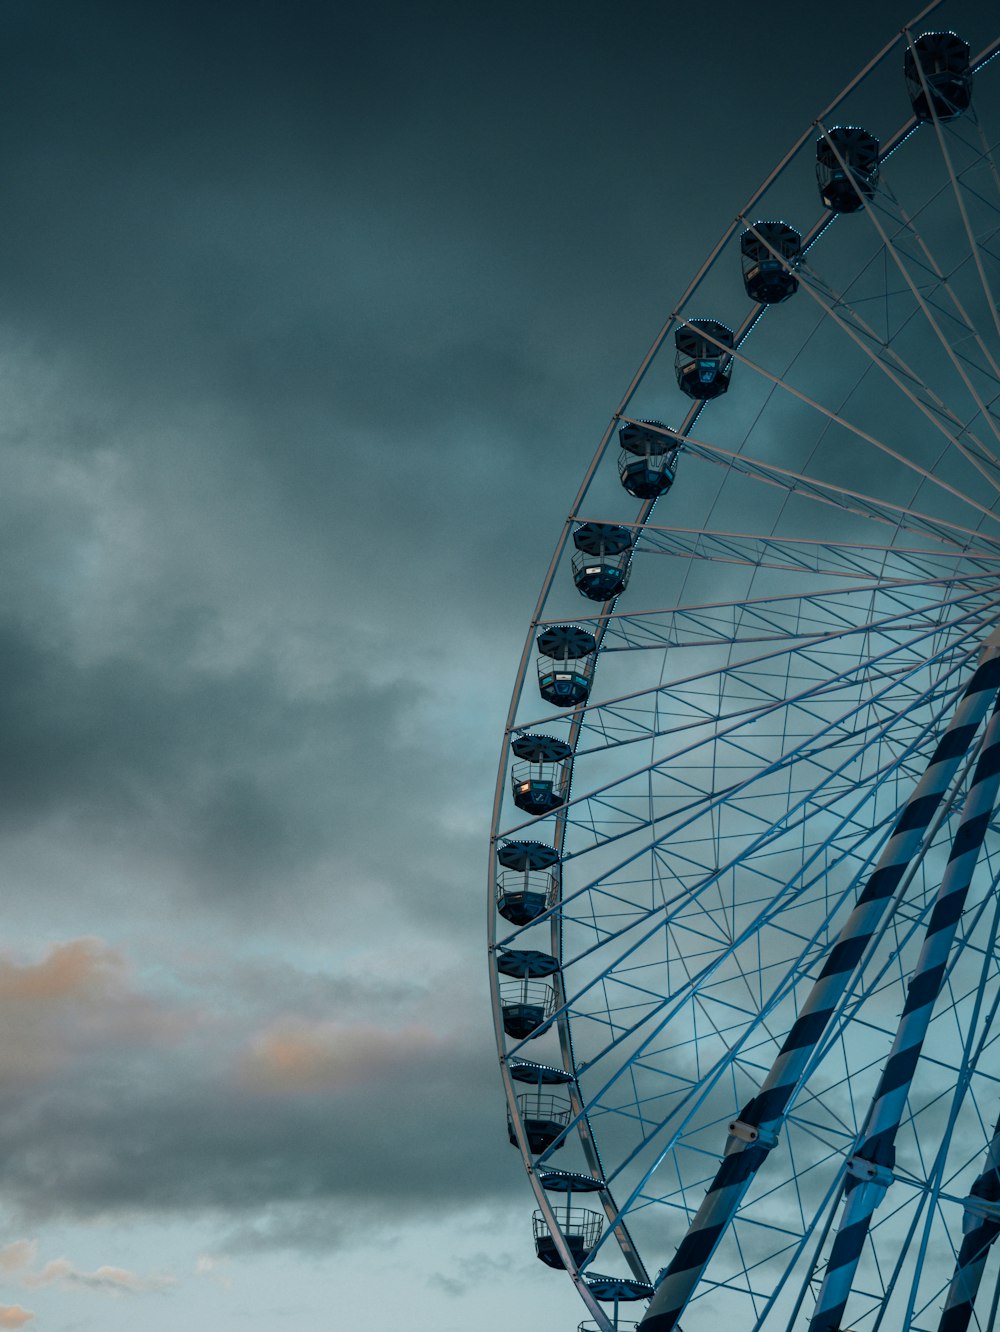 a large ferris wheel sitting under a cloudy sky